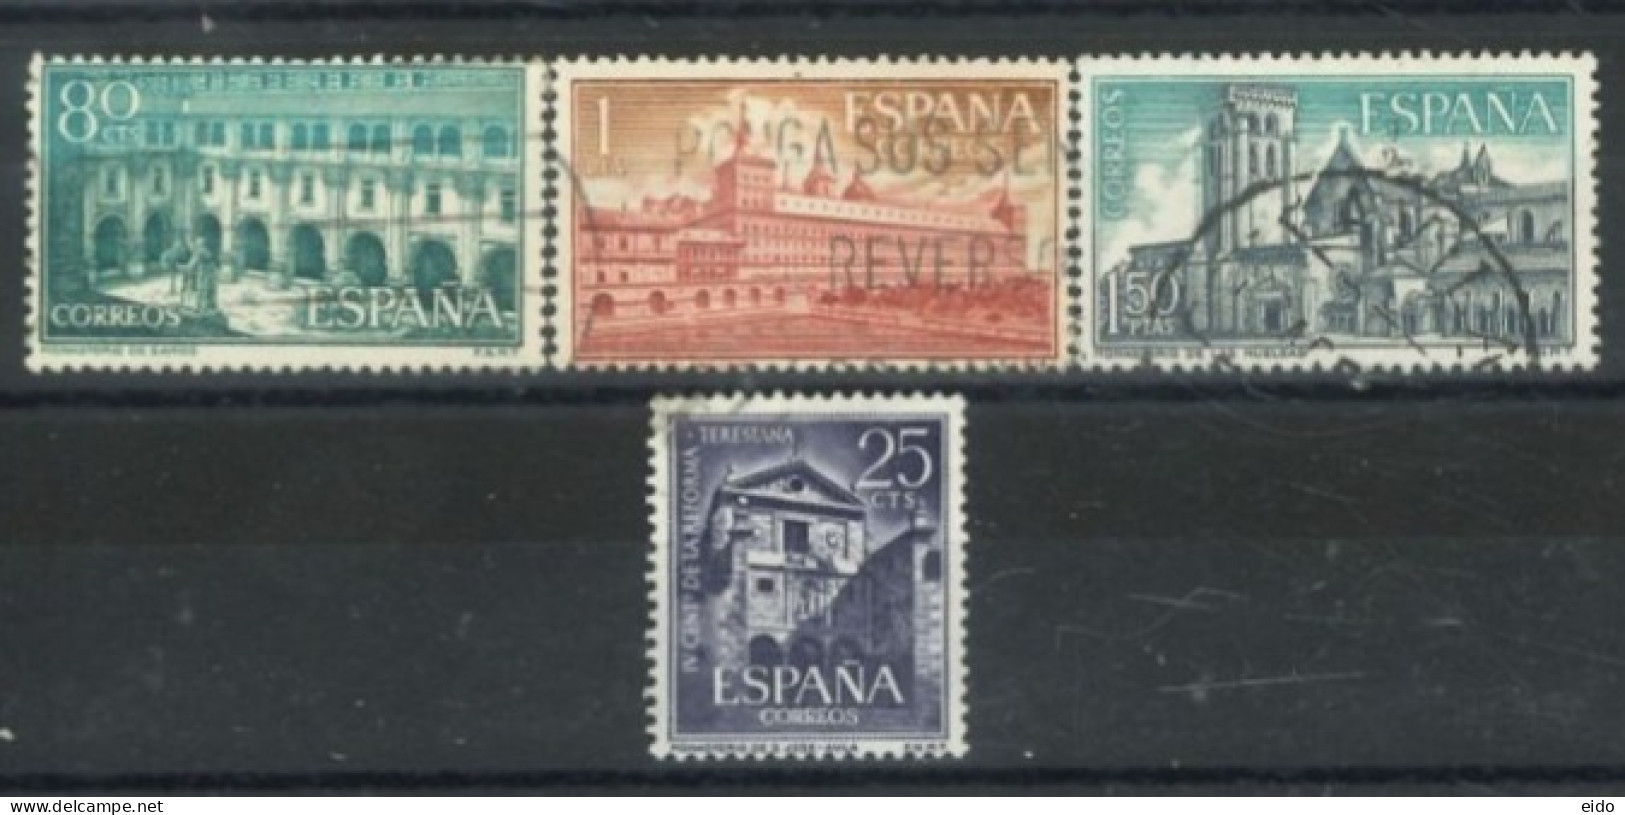 SPAIN, 1960/61, MONASTERIES & SAN JOSE CONVENT STAMPS SET OF 4, USED. - Gebraucht